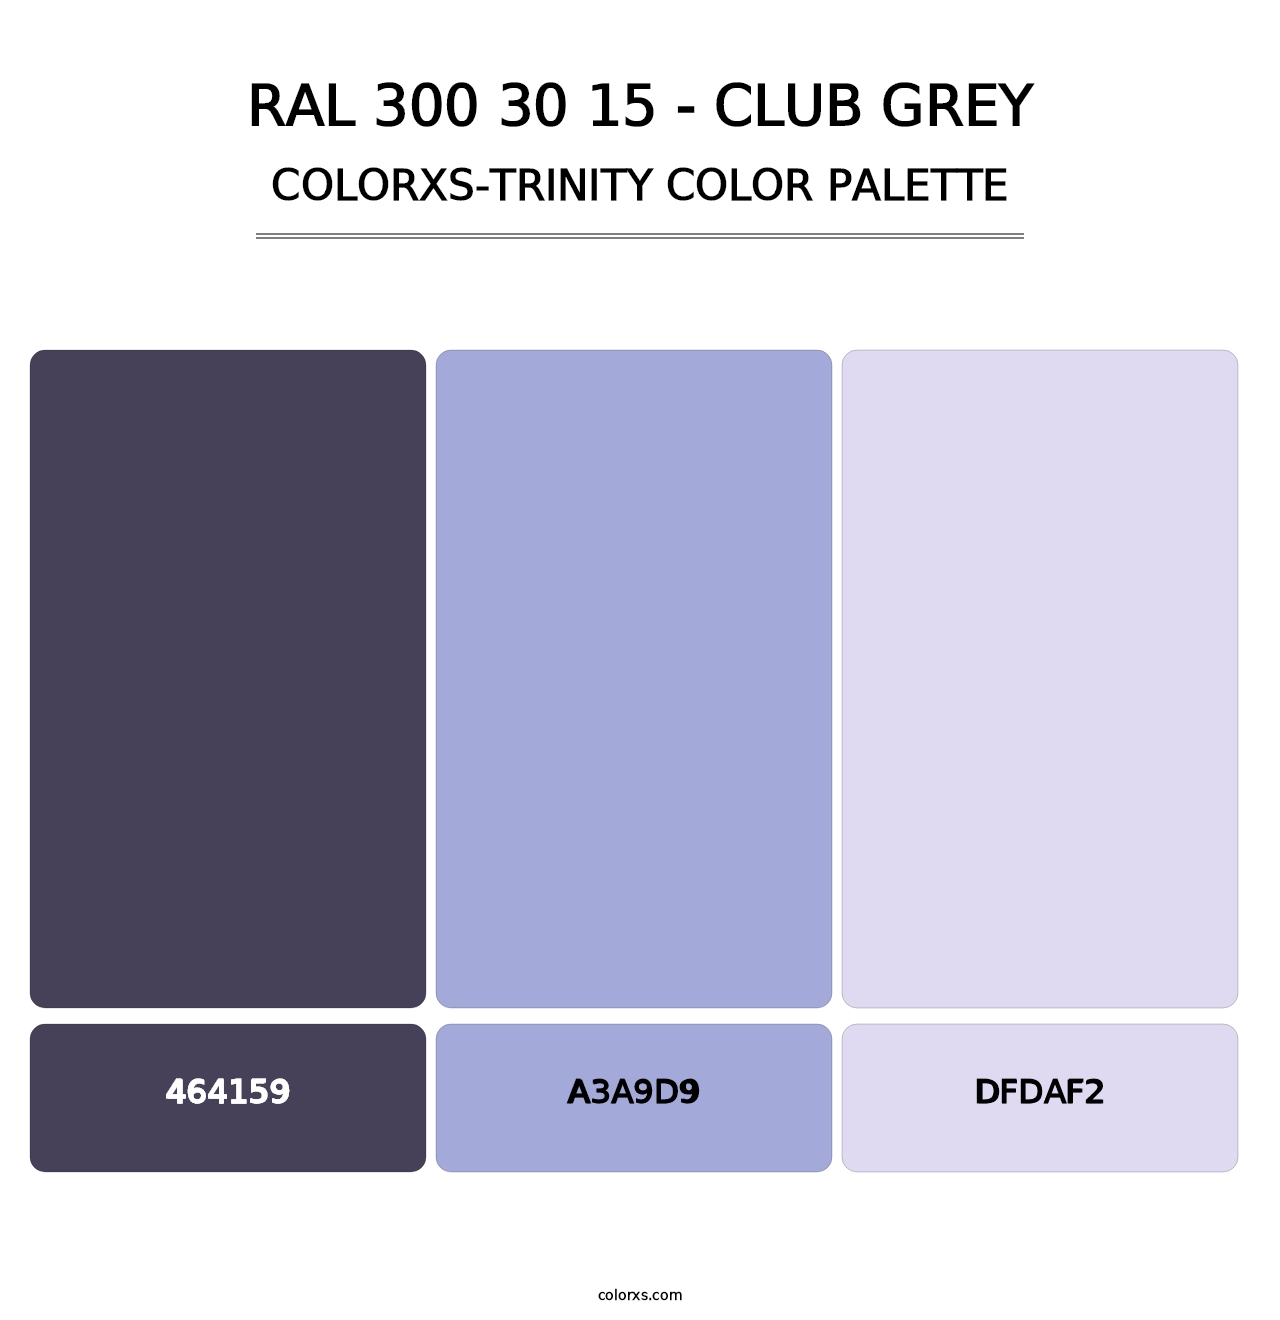 RAL 300 30 15 - Club Grey - Colorxs Trinity Palette